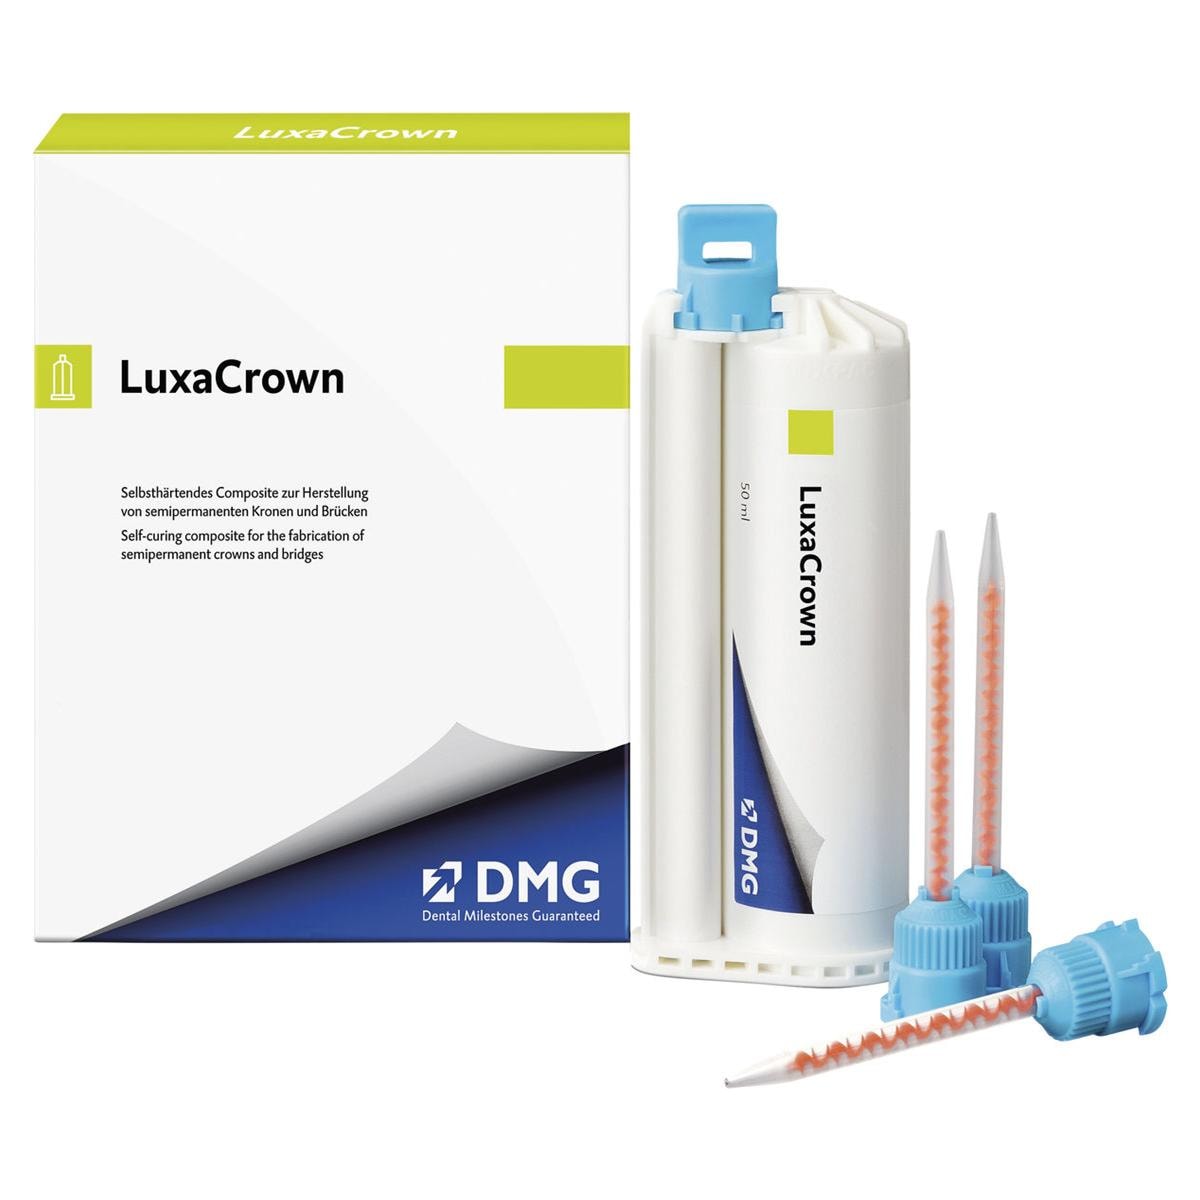 LuxaCrown - A3, cartridge 50 ml en 15 automix tips